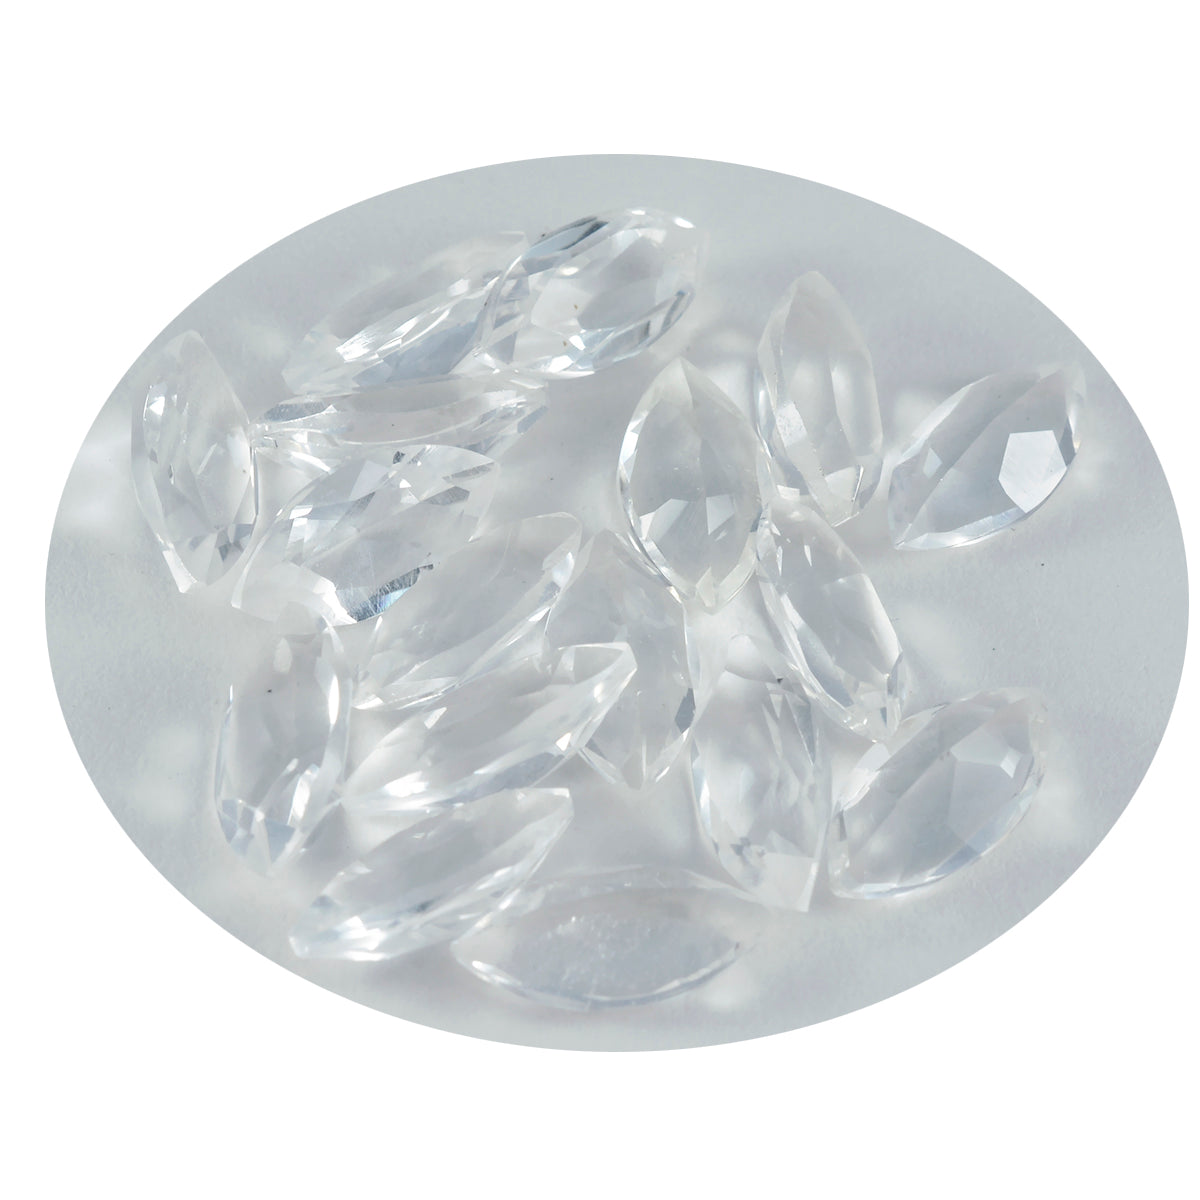 riyogems 1шт белый кристалл кварца граненый 6x12 мм форма маркиза A+ качество драгоценные камни